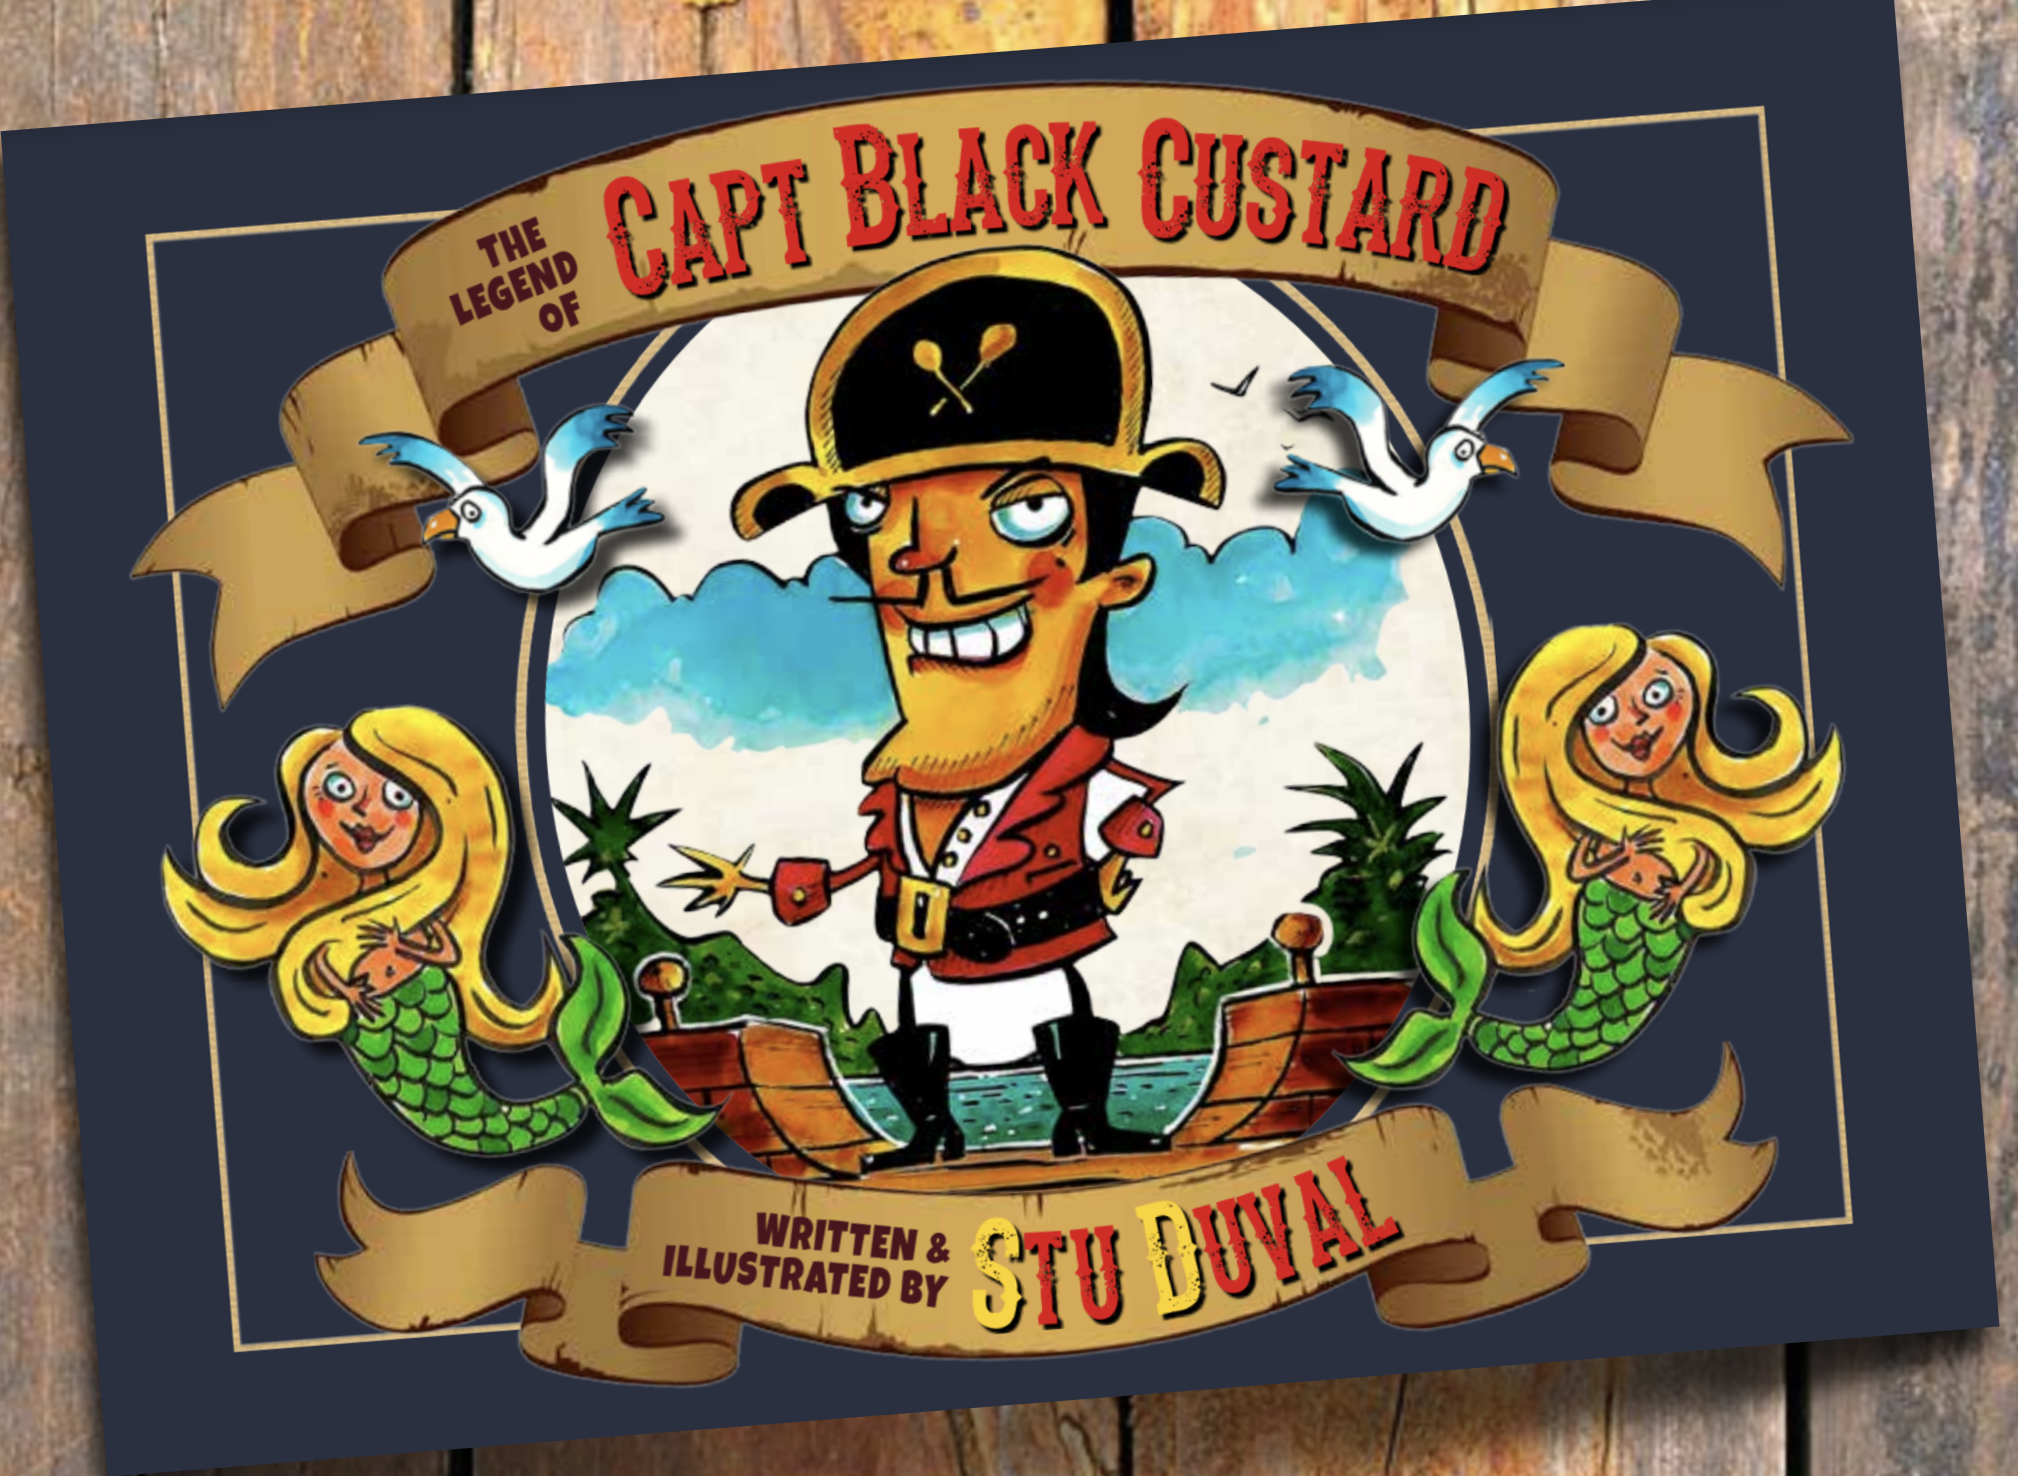 The Legend of Capt Black Custard